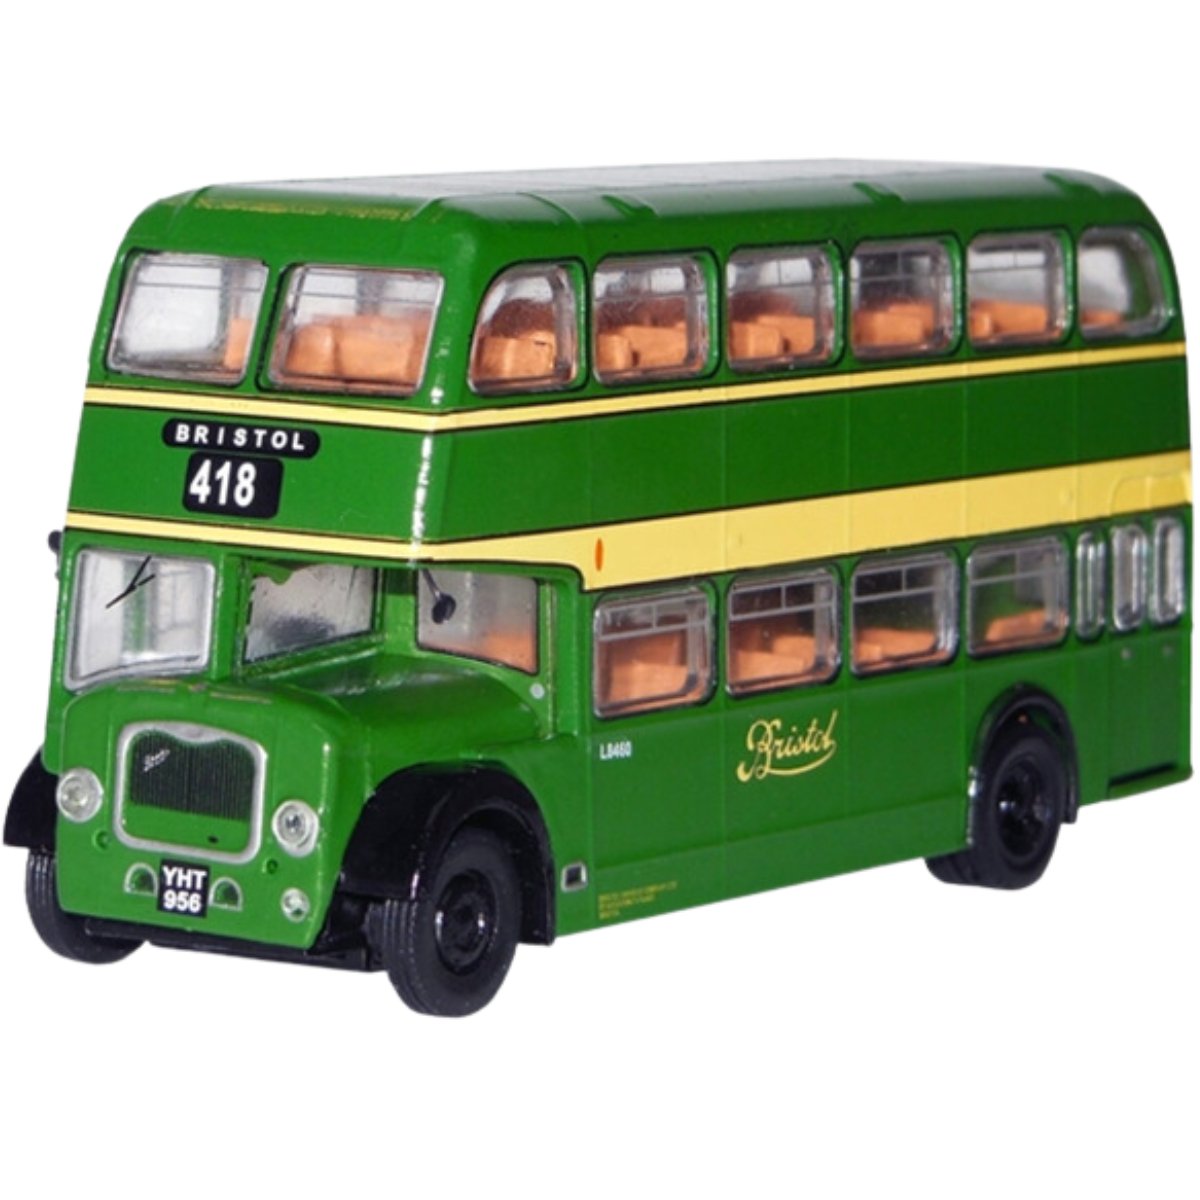 1:76 Scale Model Bus - BT Models B108A Bristol Lodekka LD1 Bristol Omnibus Company